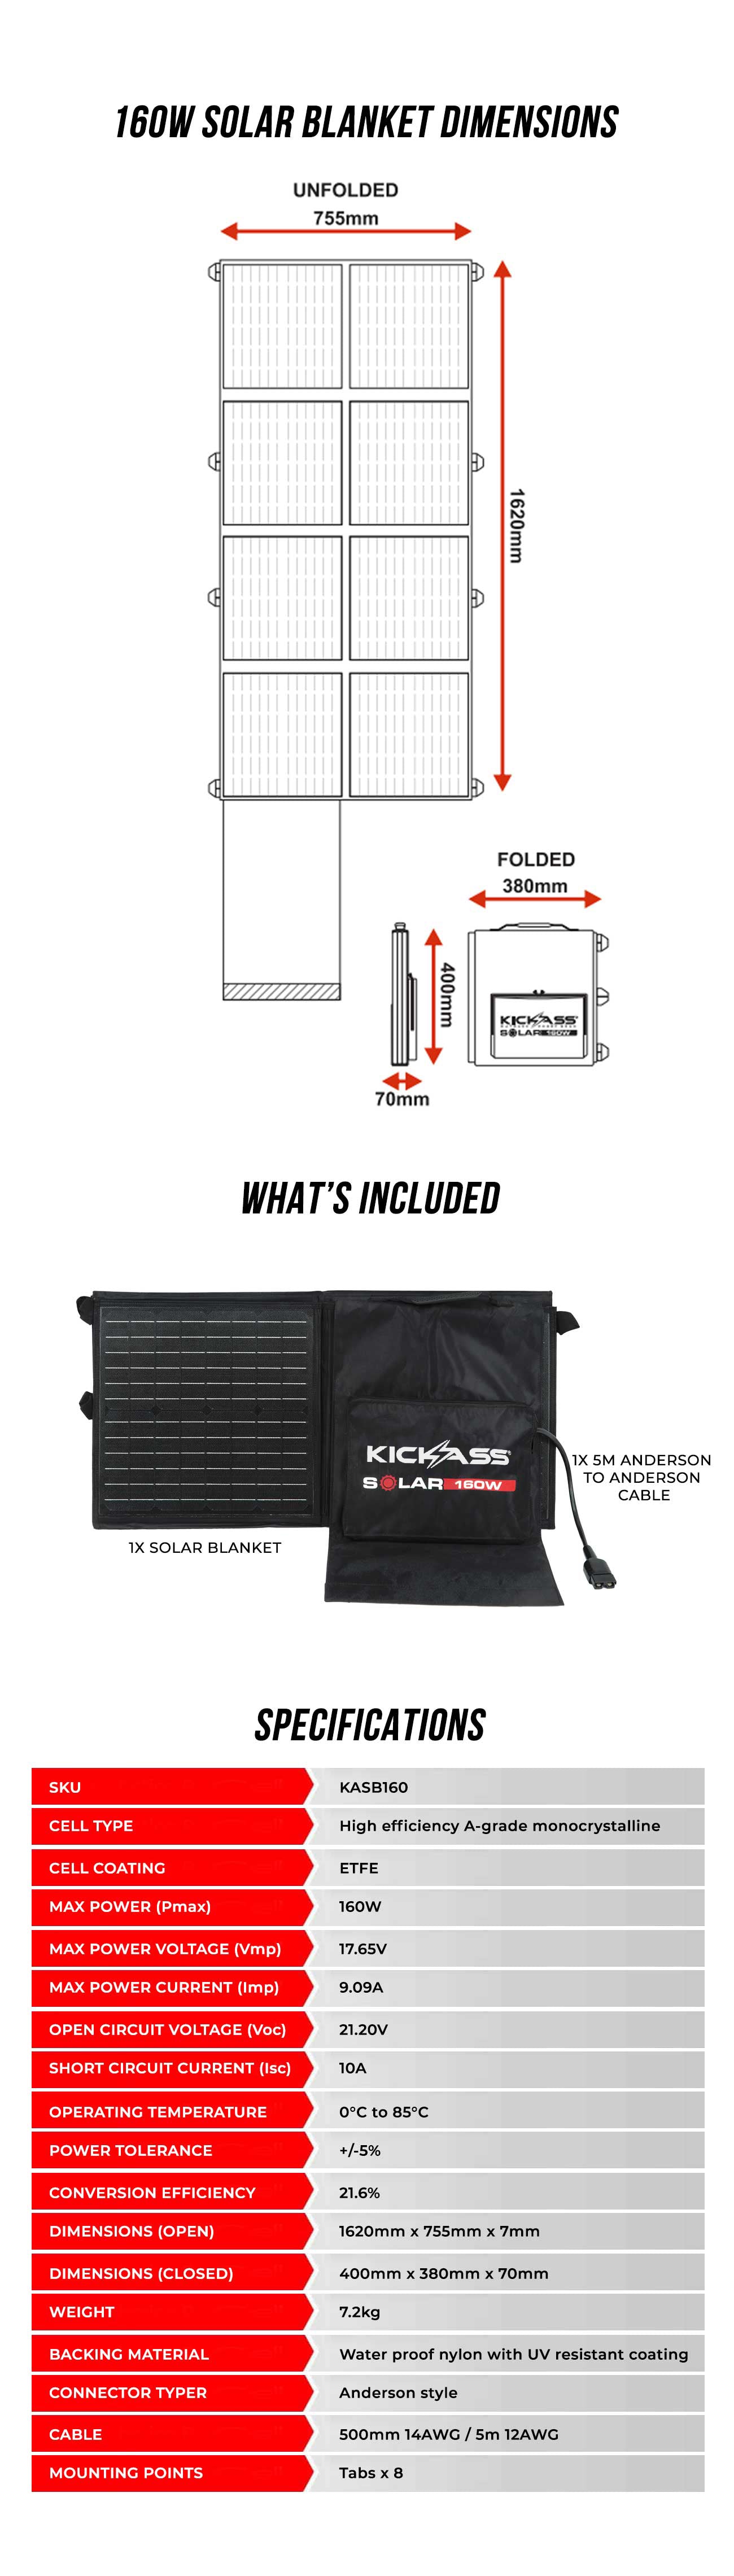 KickAss 160W Portable Solar Blanket